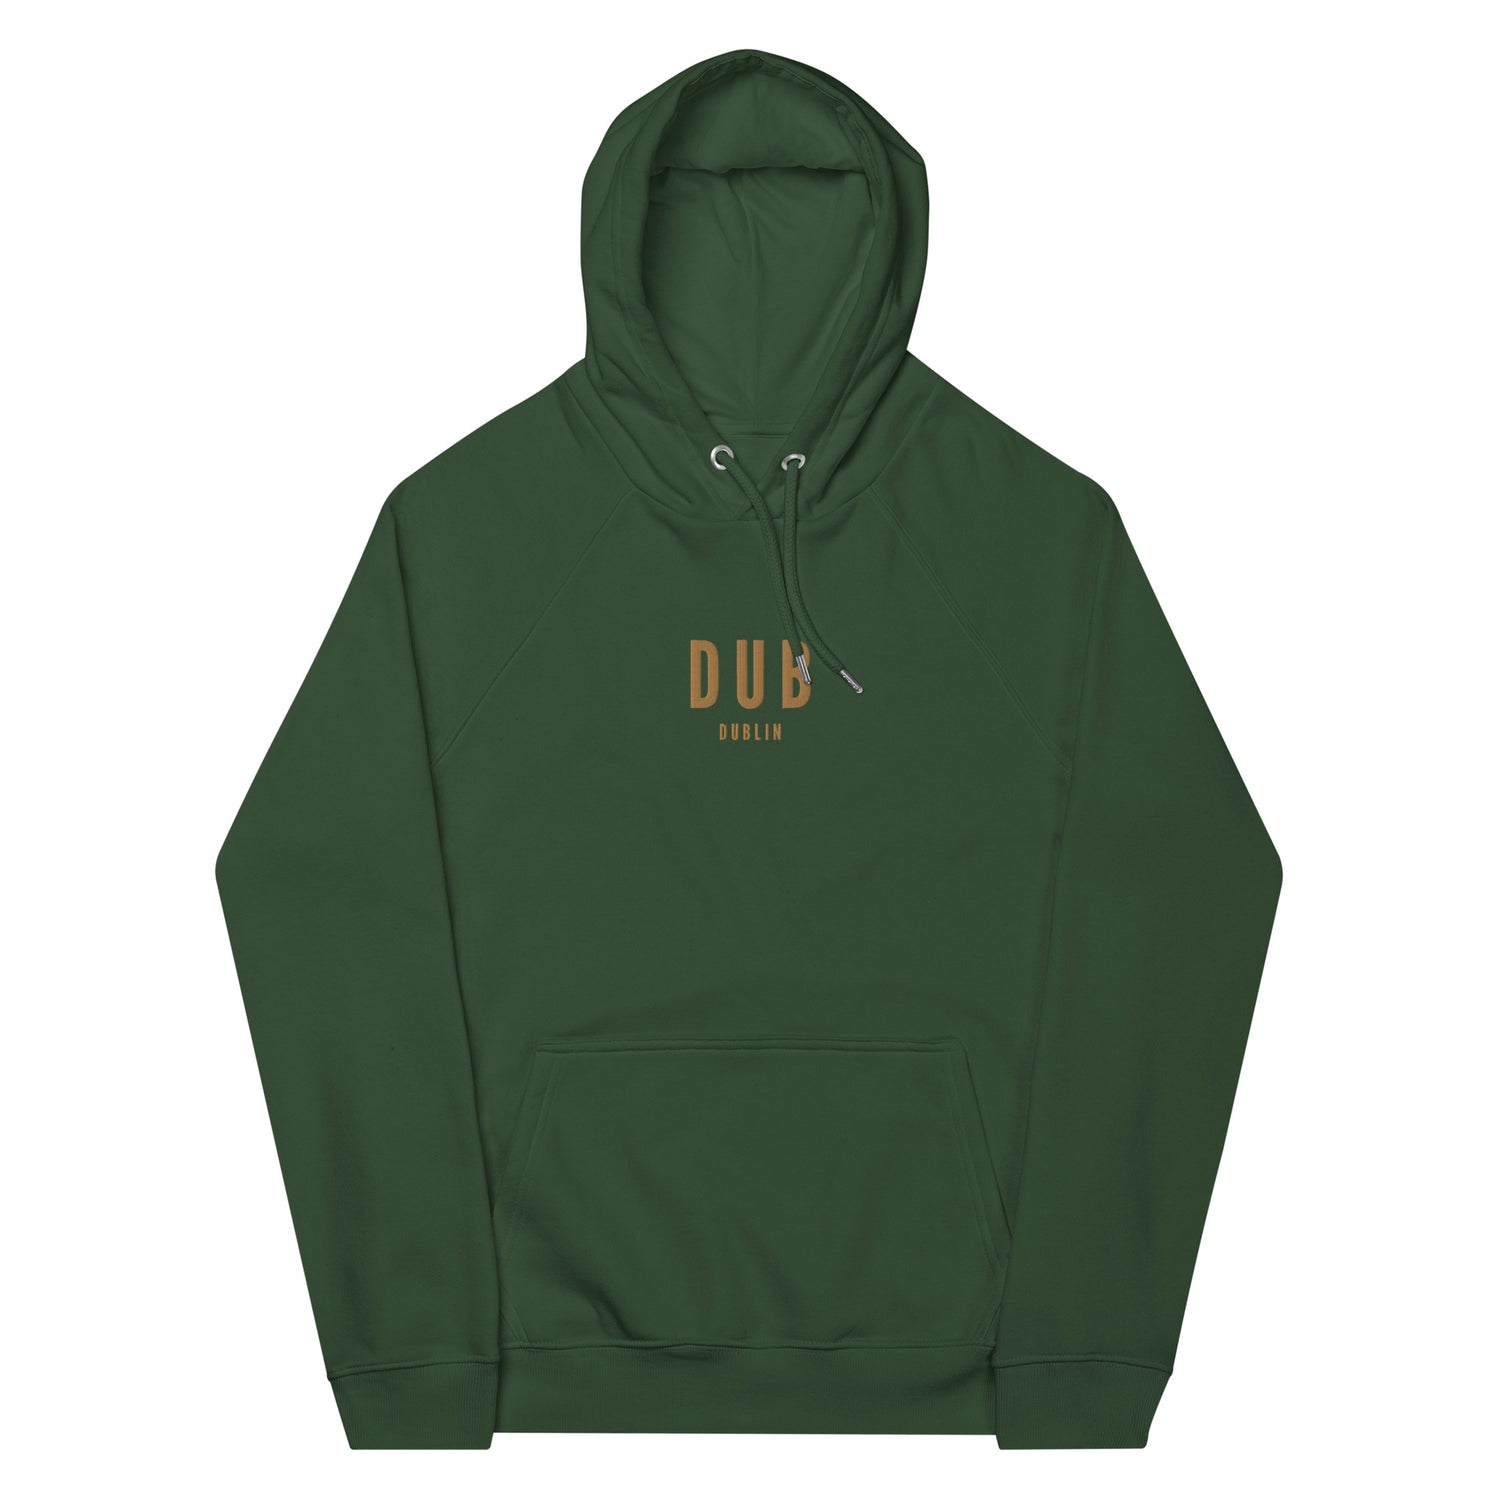 Dublin Ireland Hoodies and Sweatshirts • DUB Airport Code